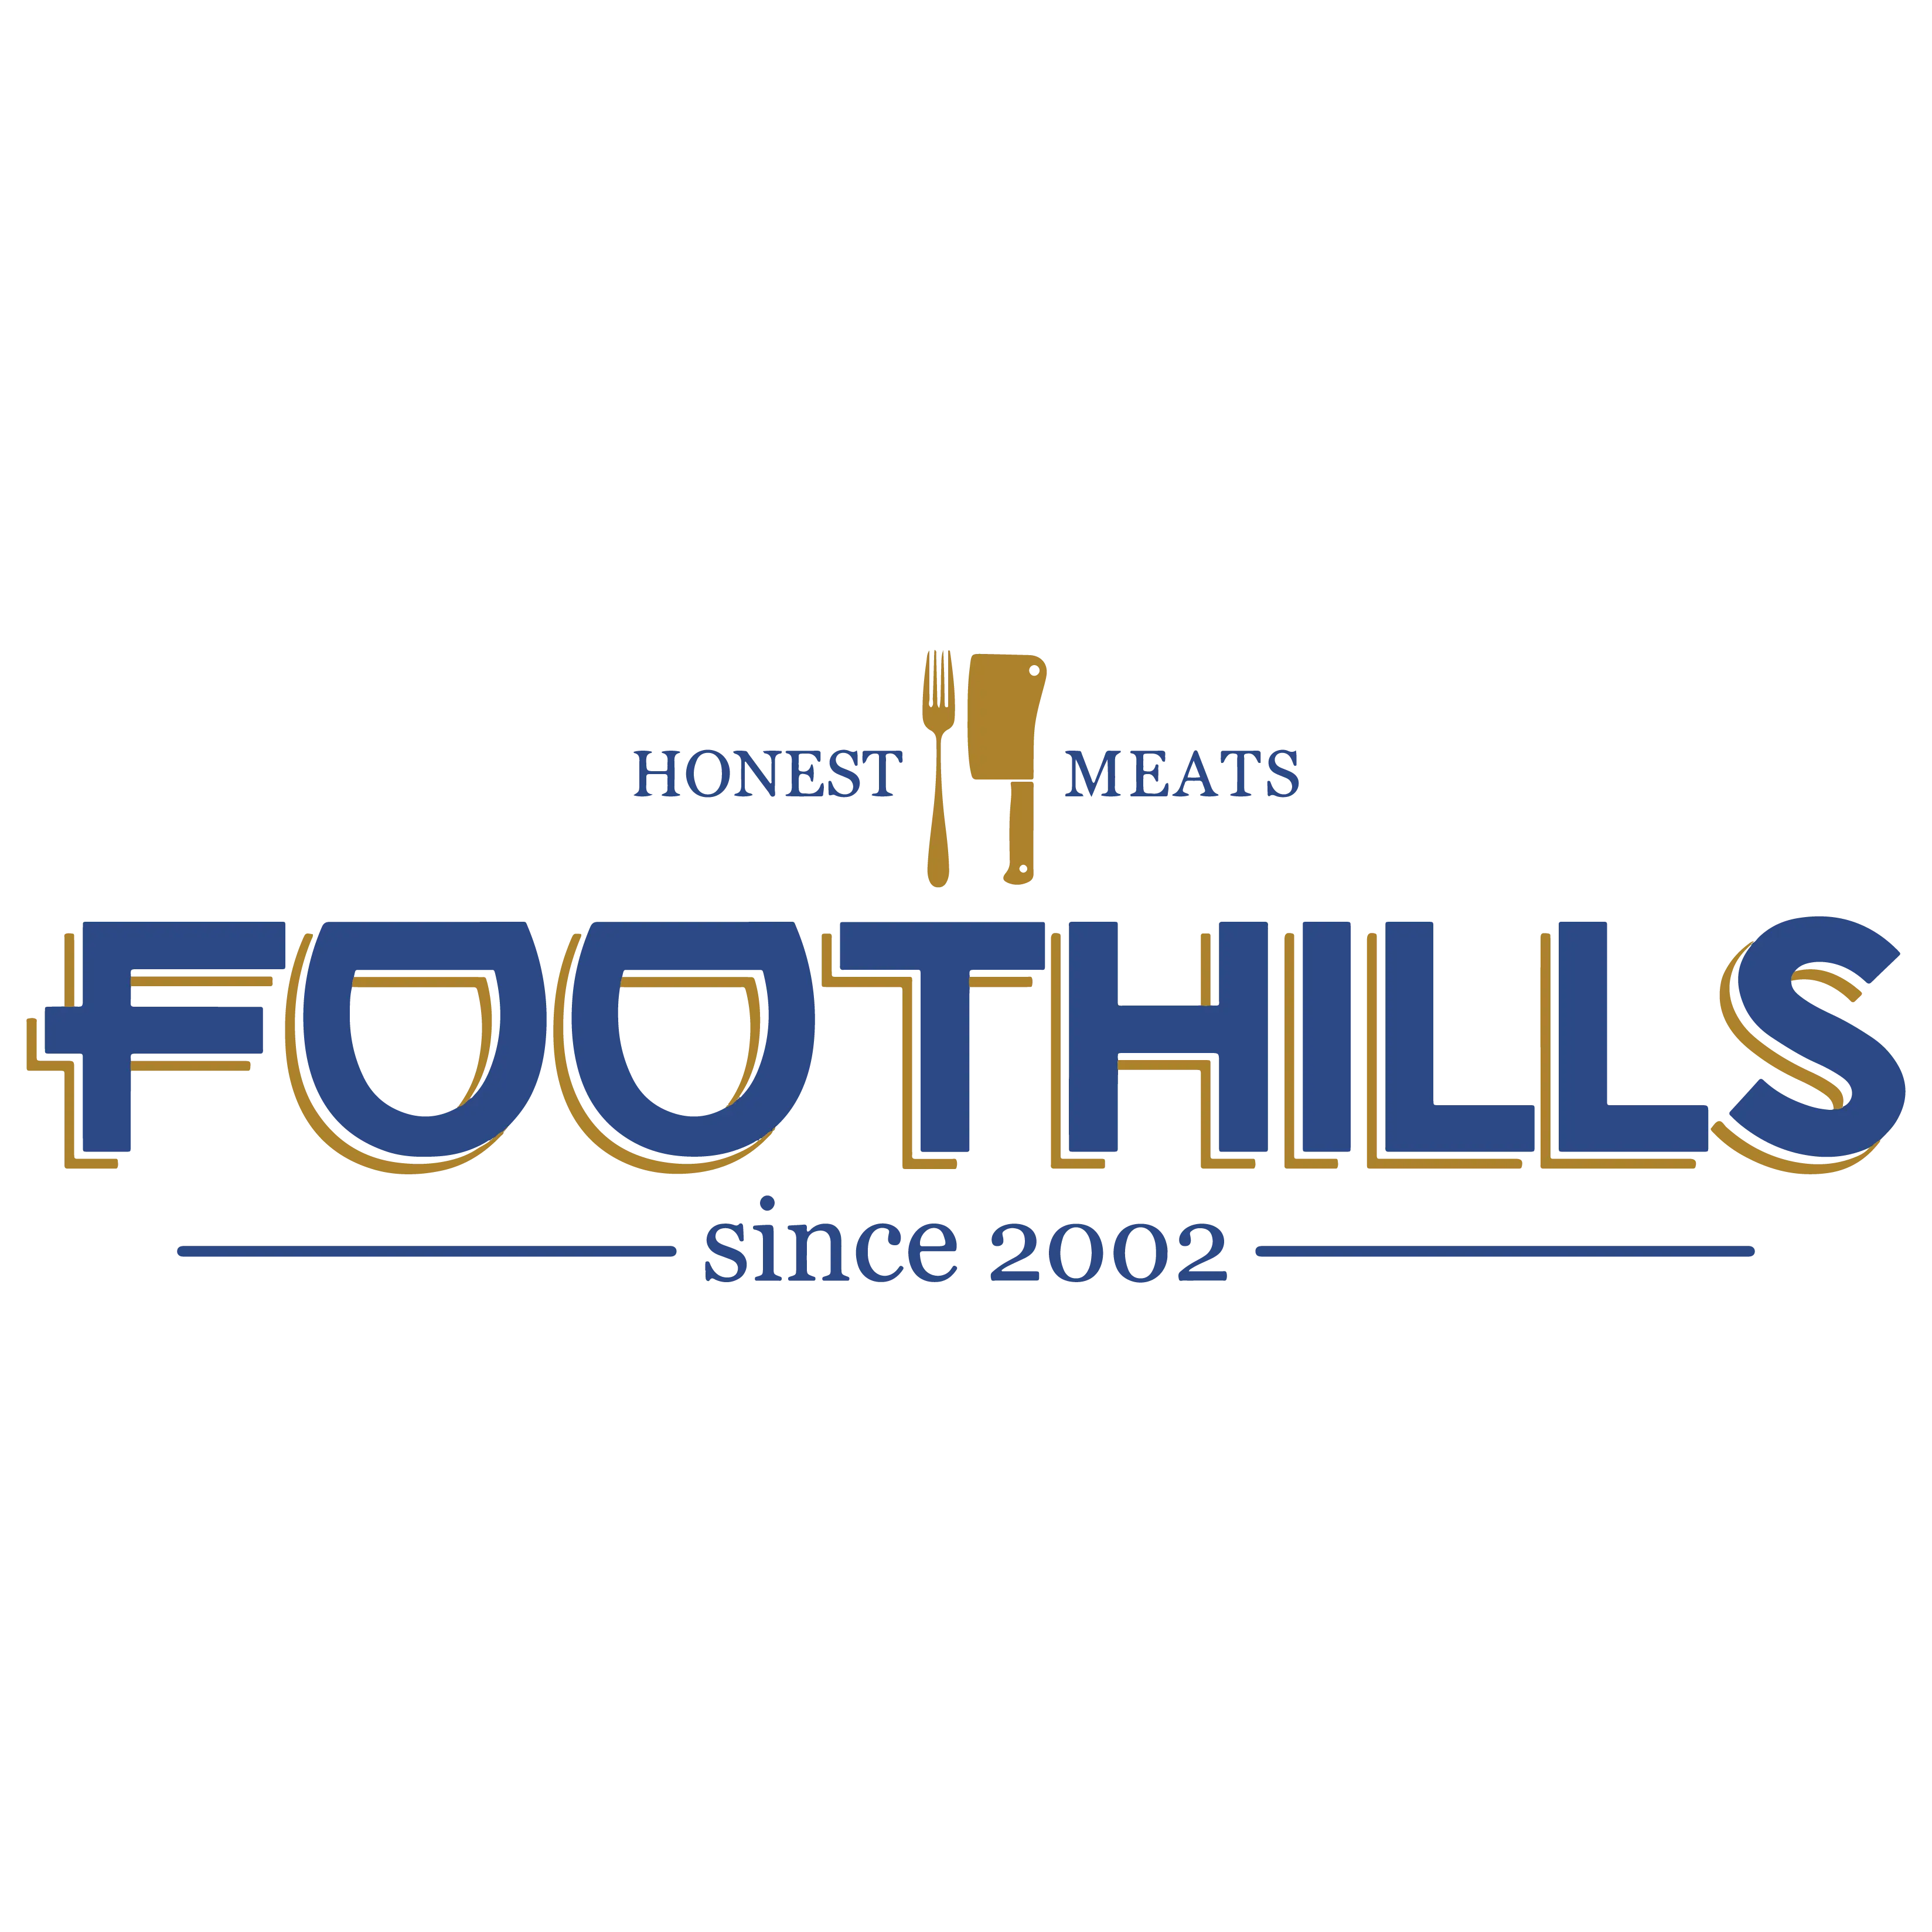 foothills honest meats app logo